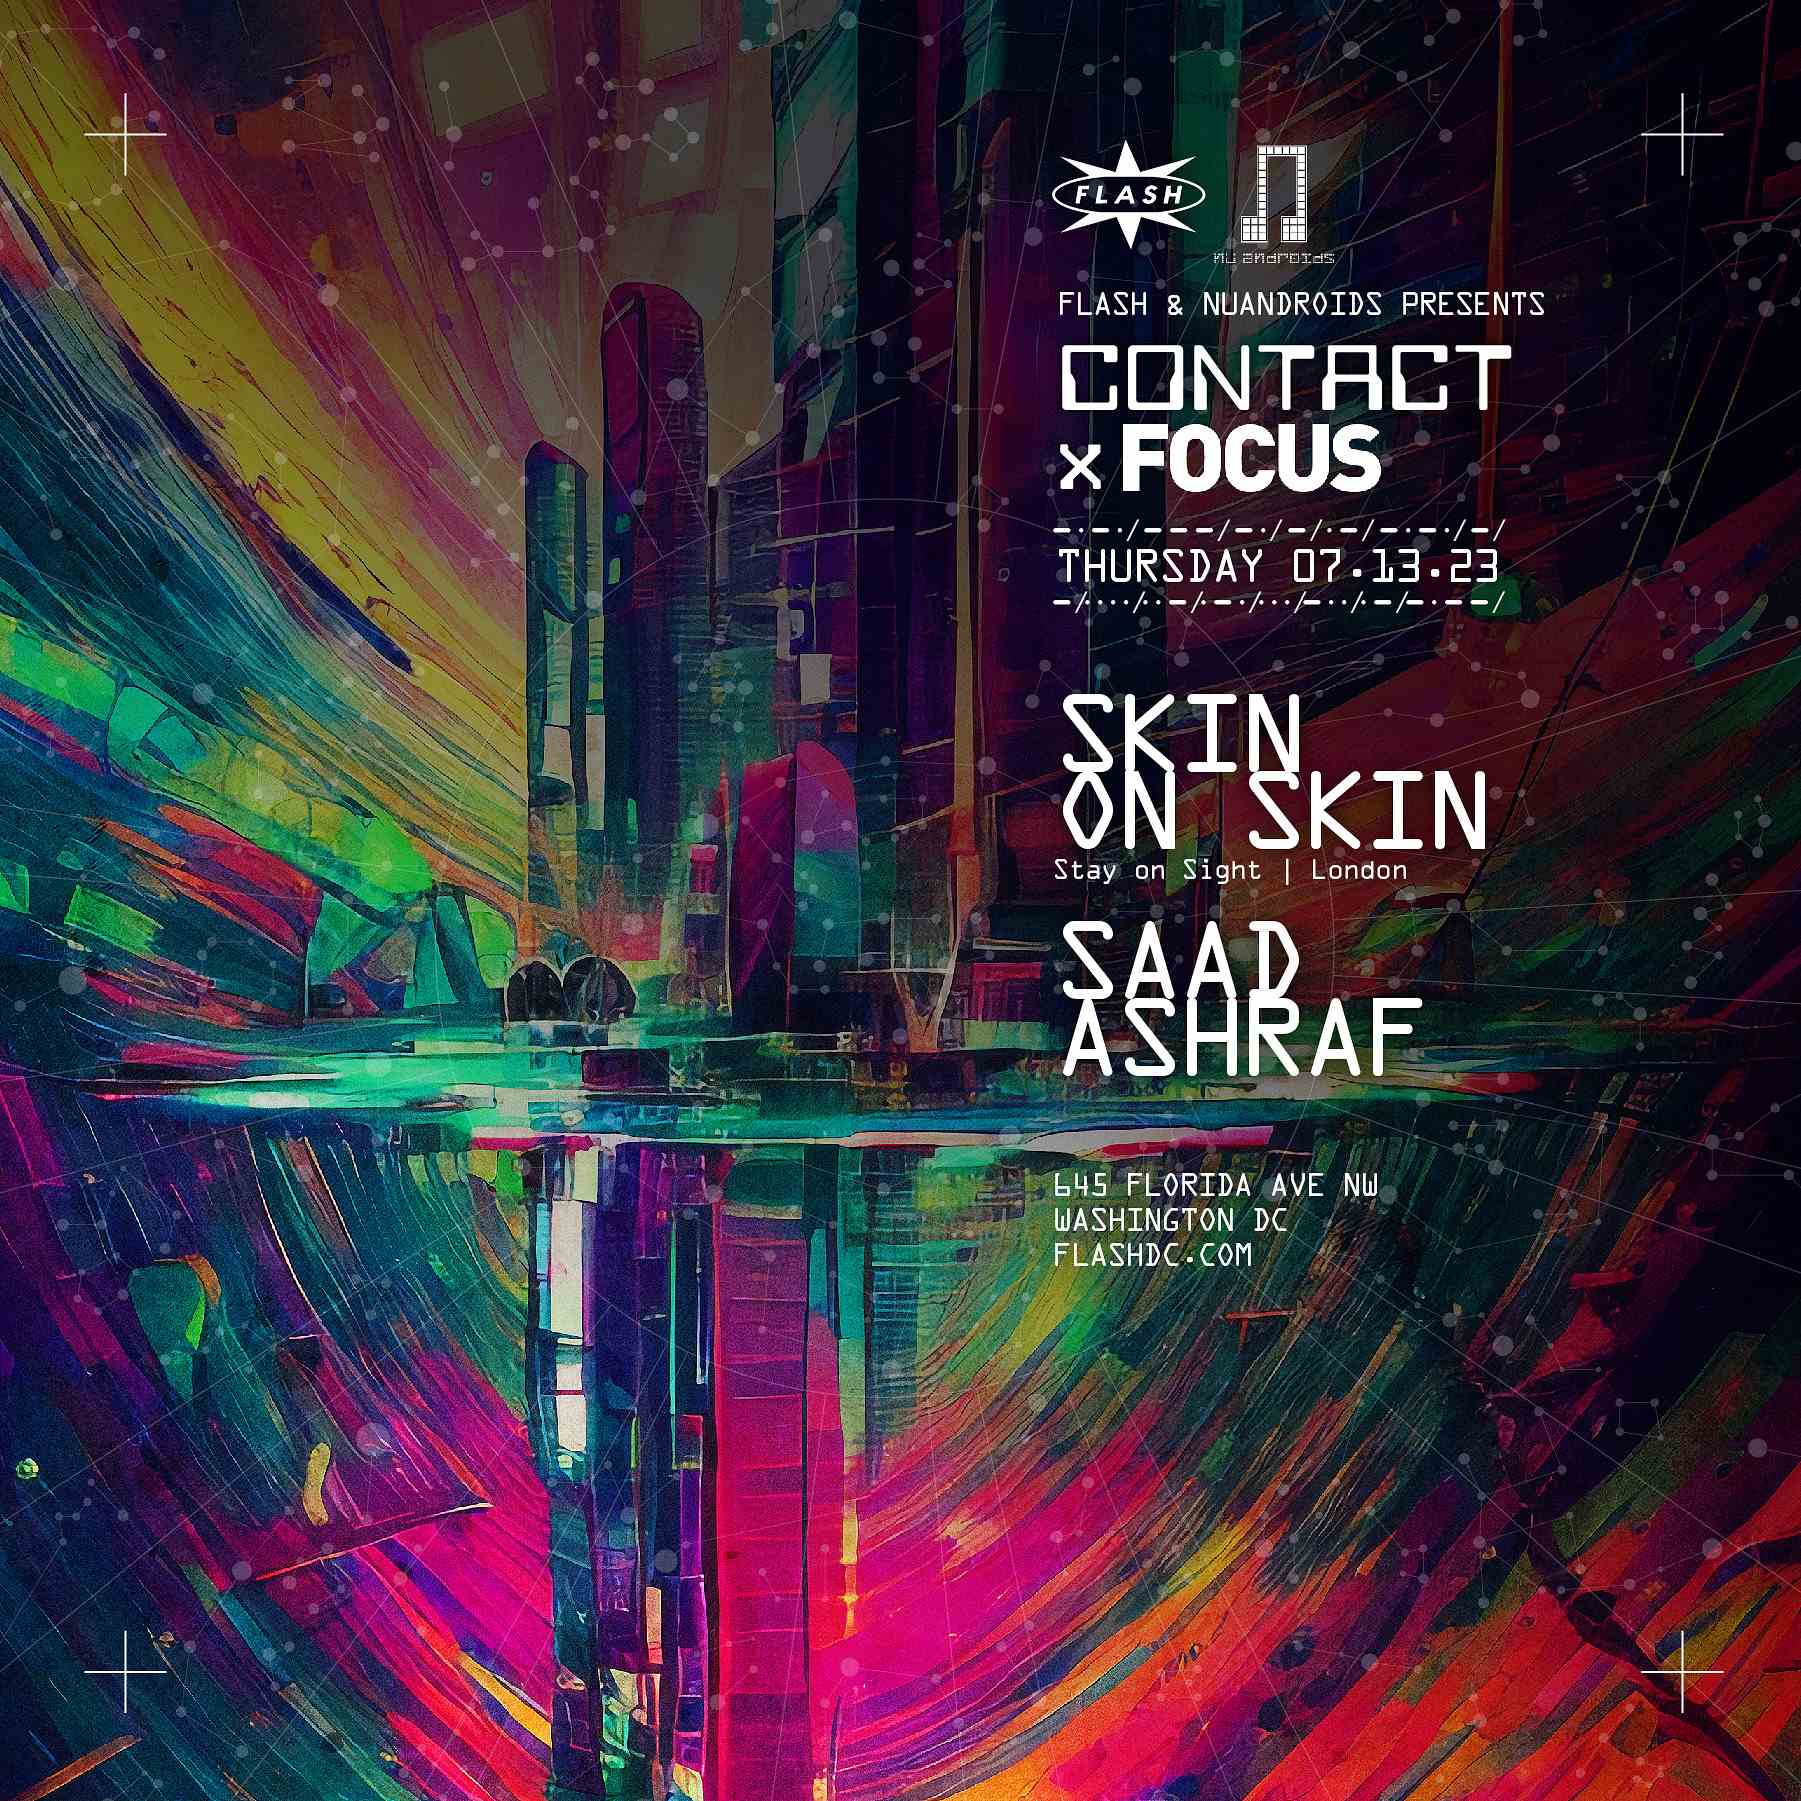 CONTACT x FOCUS: Skin on Skin - Saad Ashraf event flyer